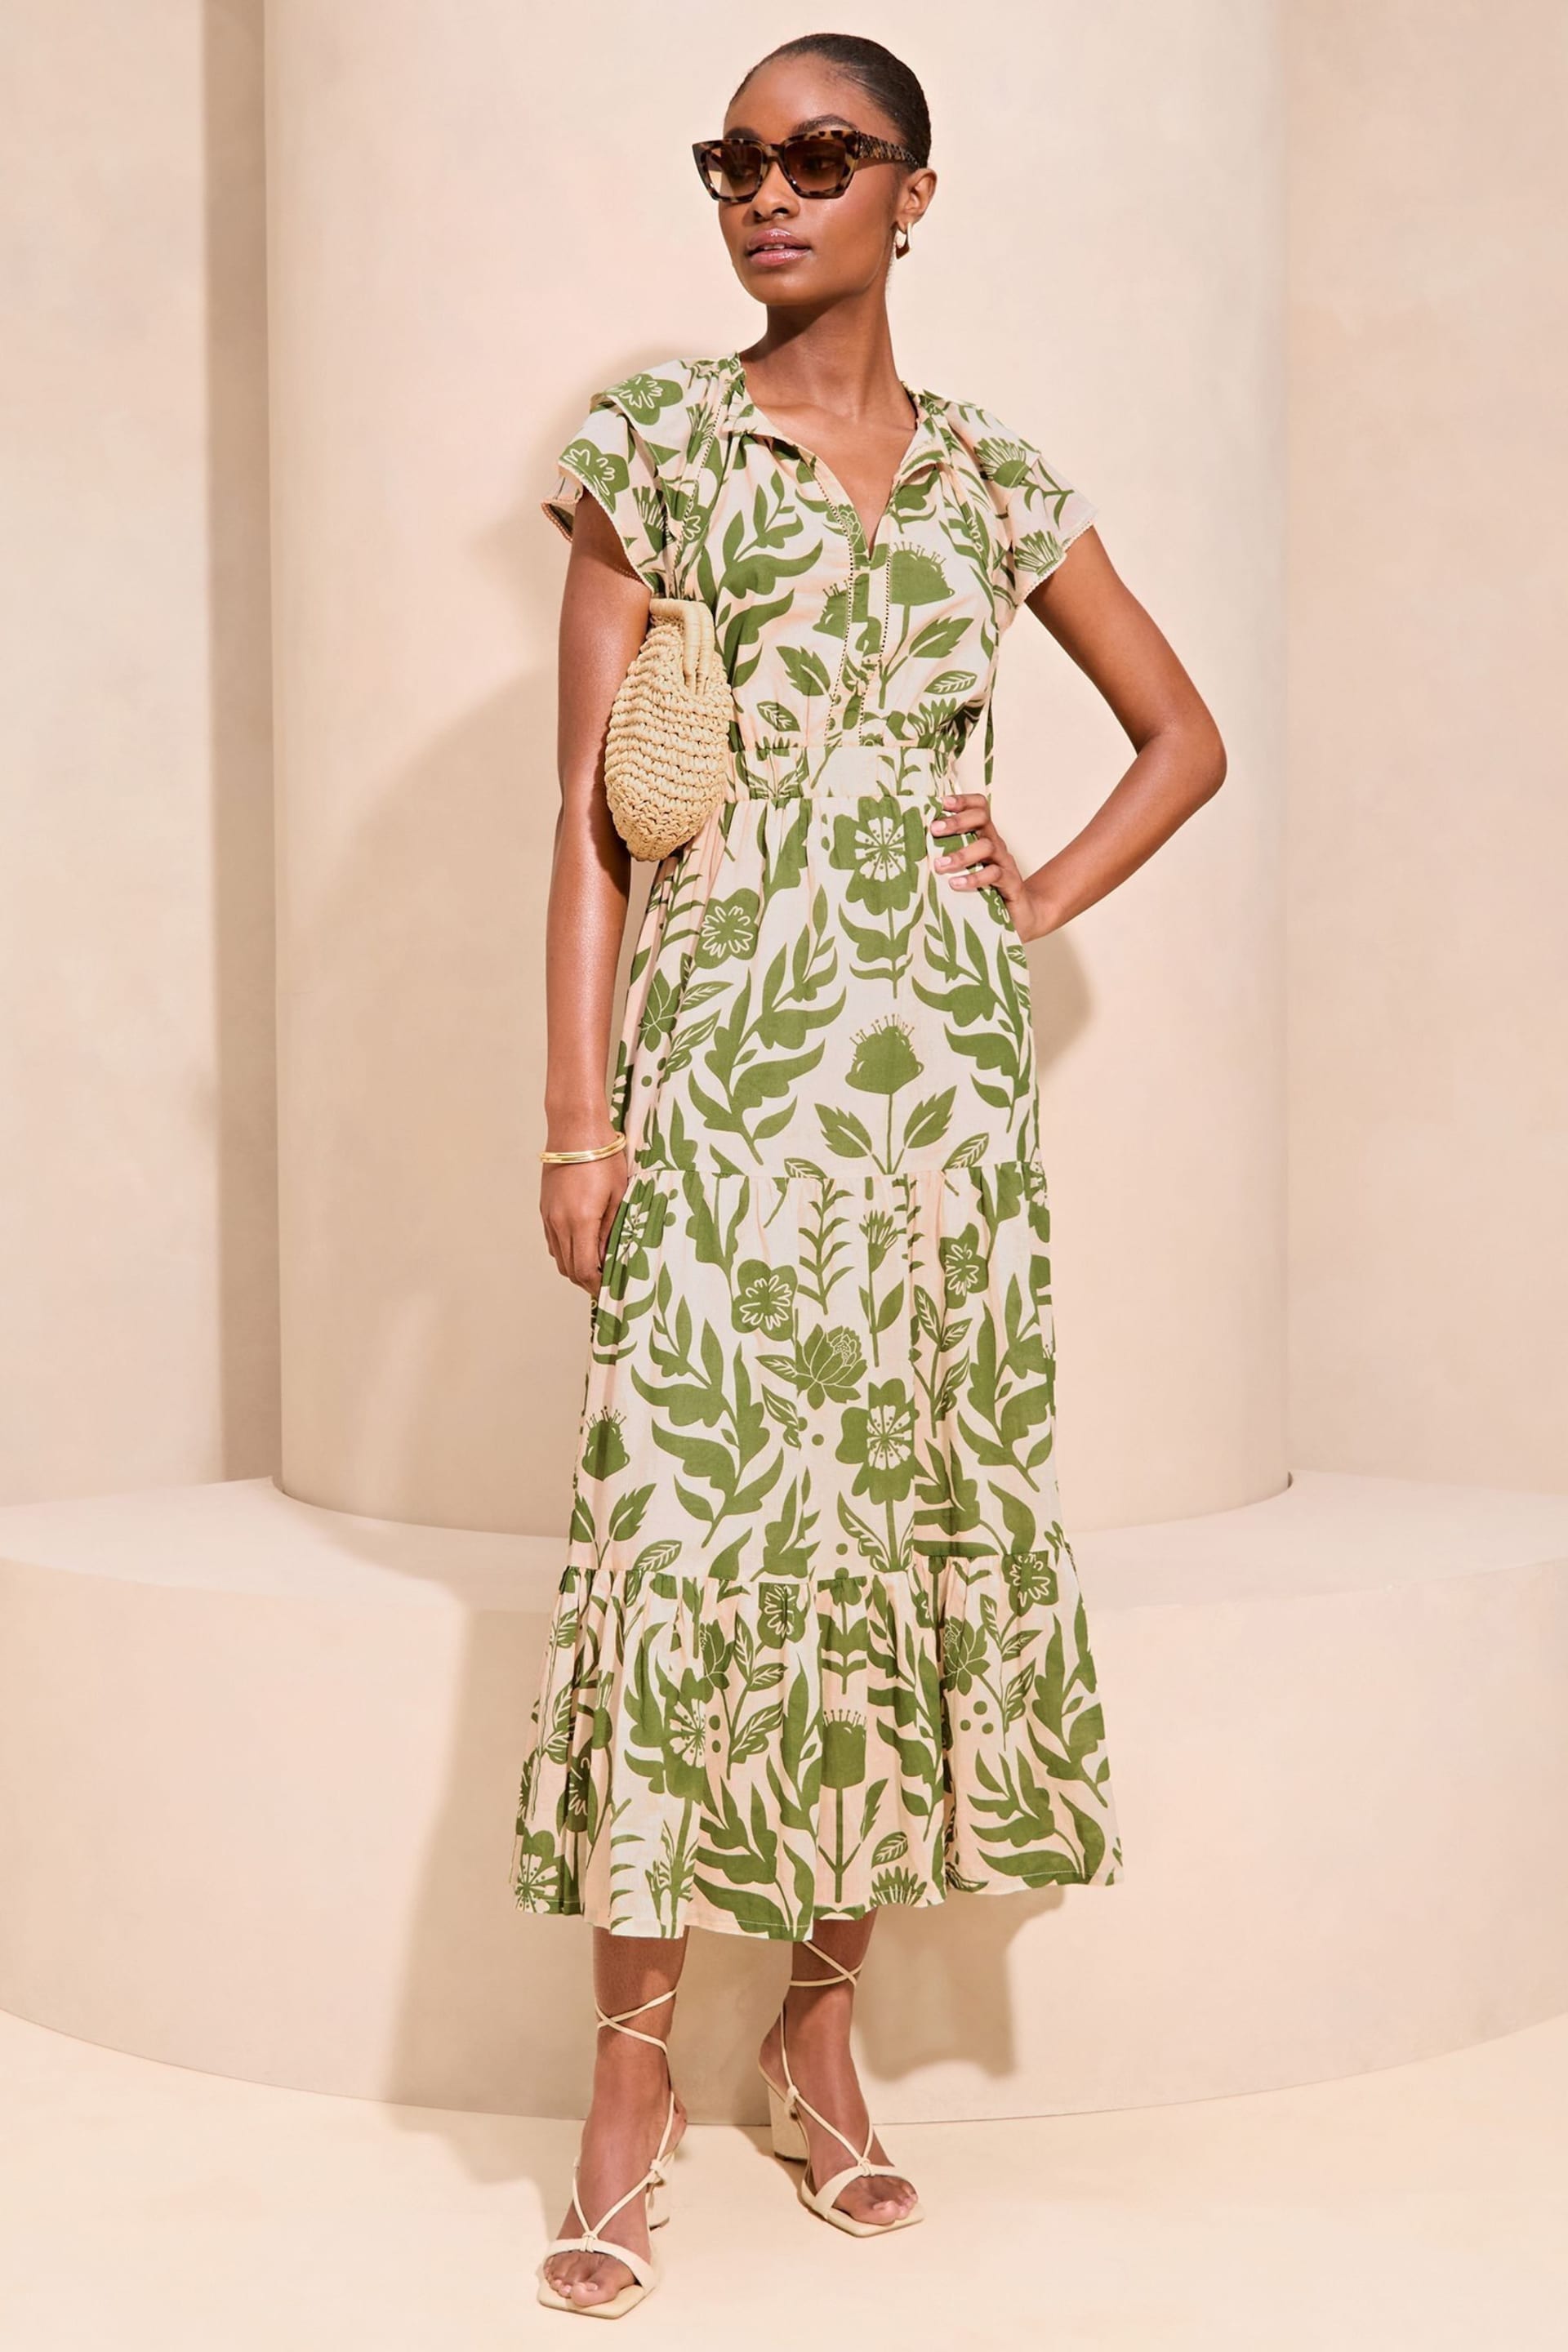 Lipsy Green Short Sleeve Tiered Printed Summer Midi Dress - Image 1 of 4